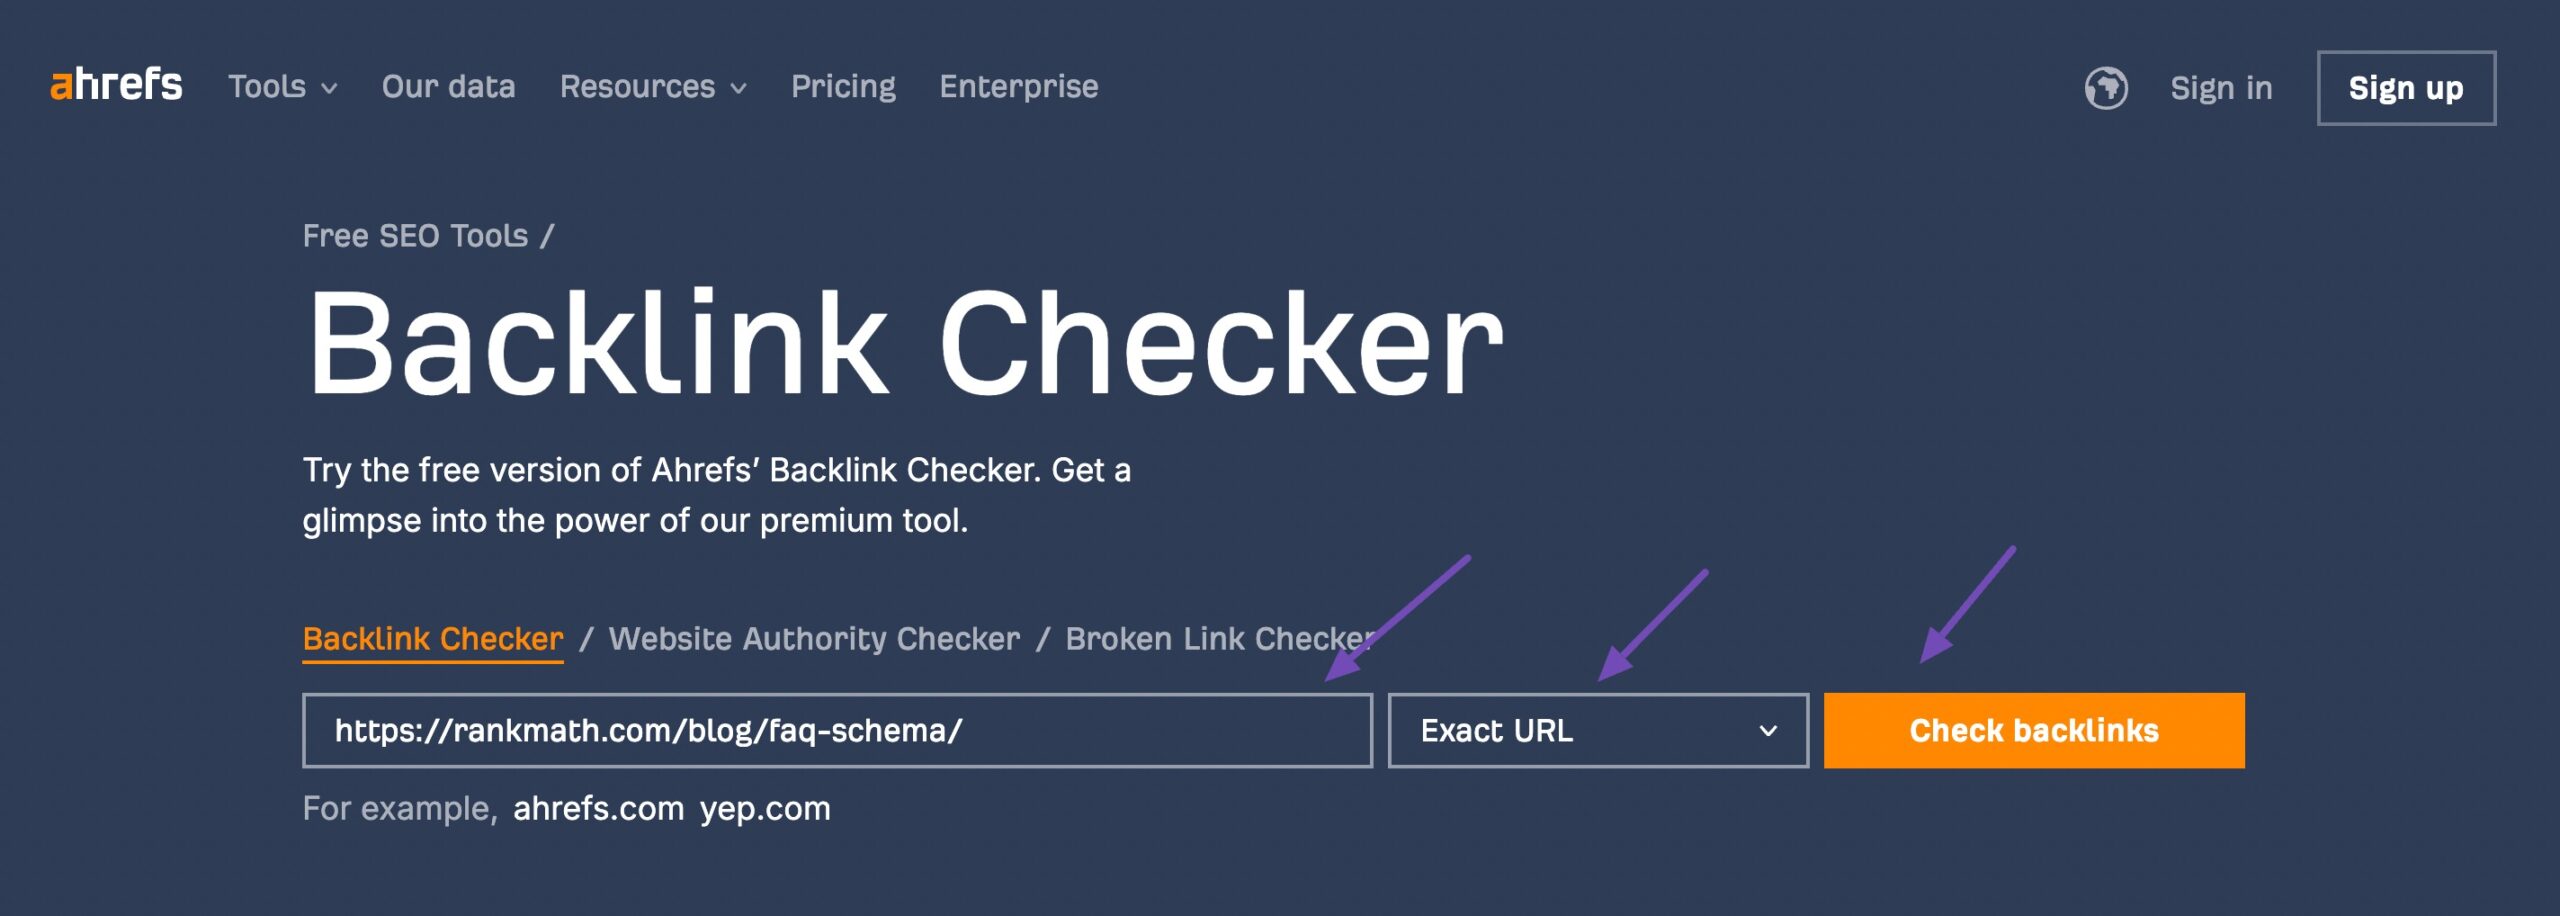 Ahrefs Backlink Checker tool